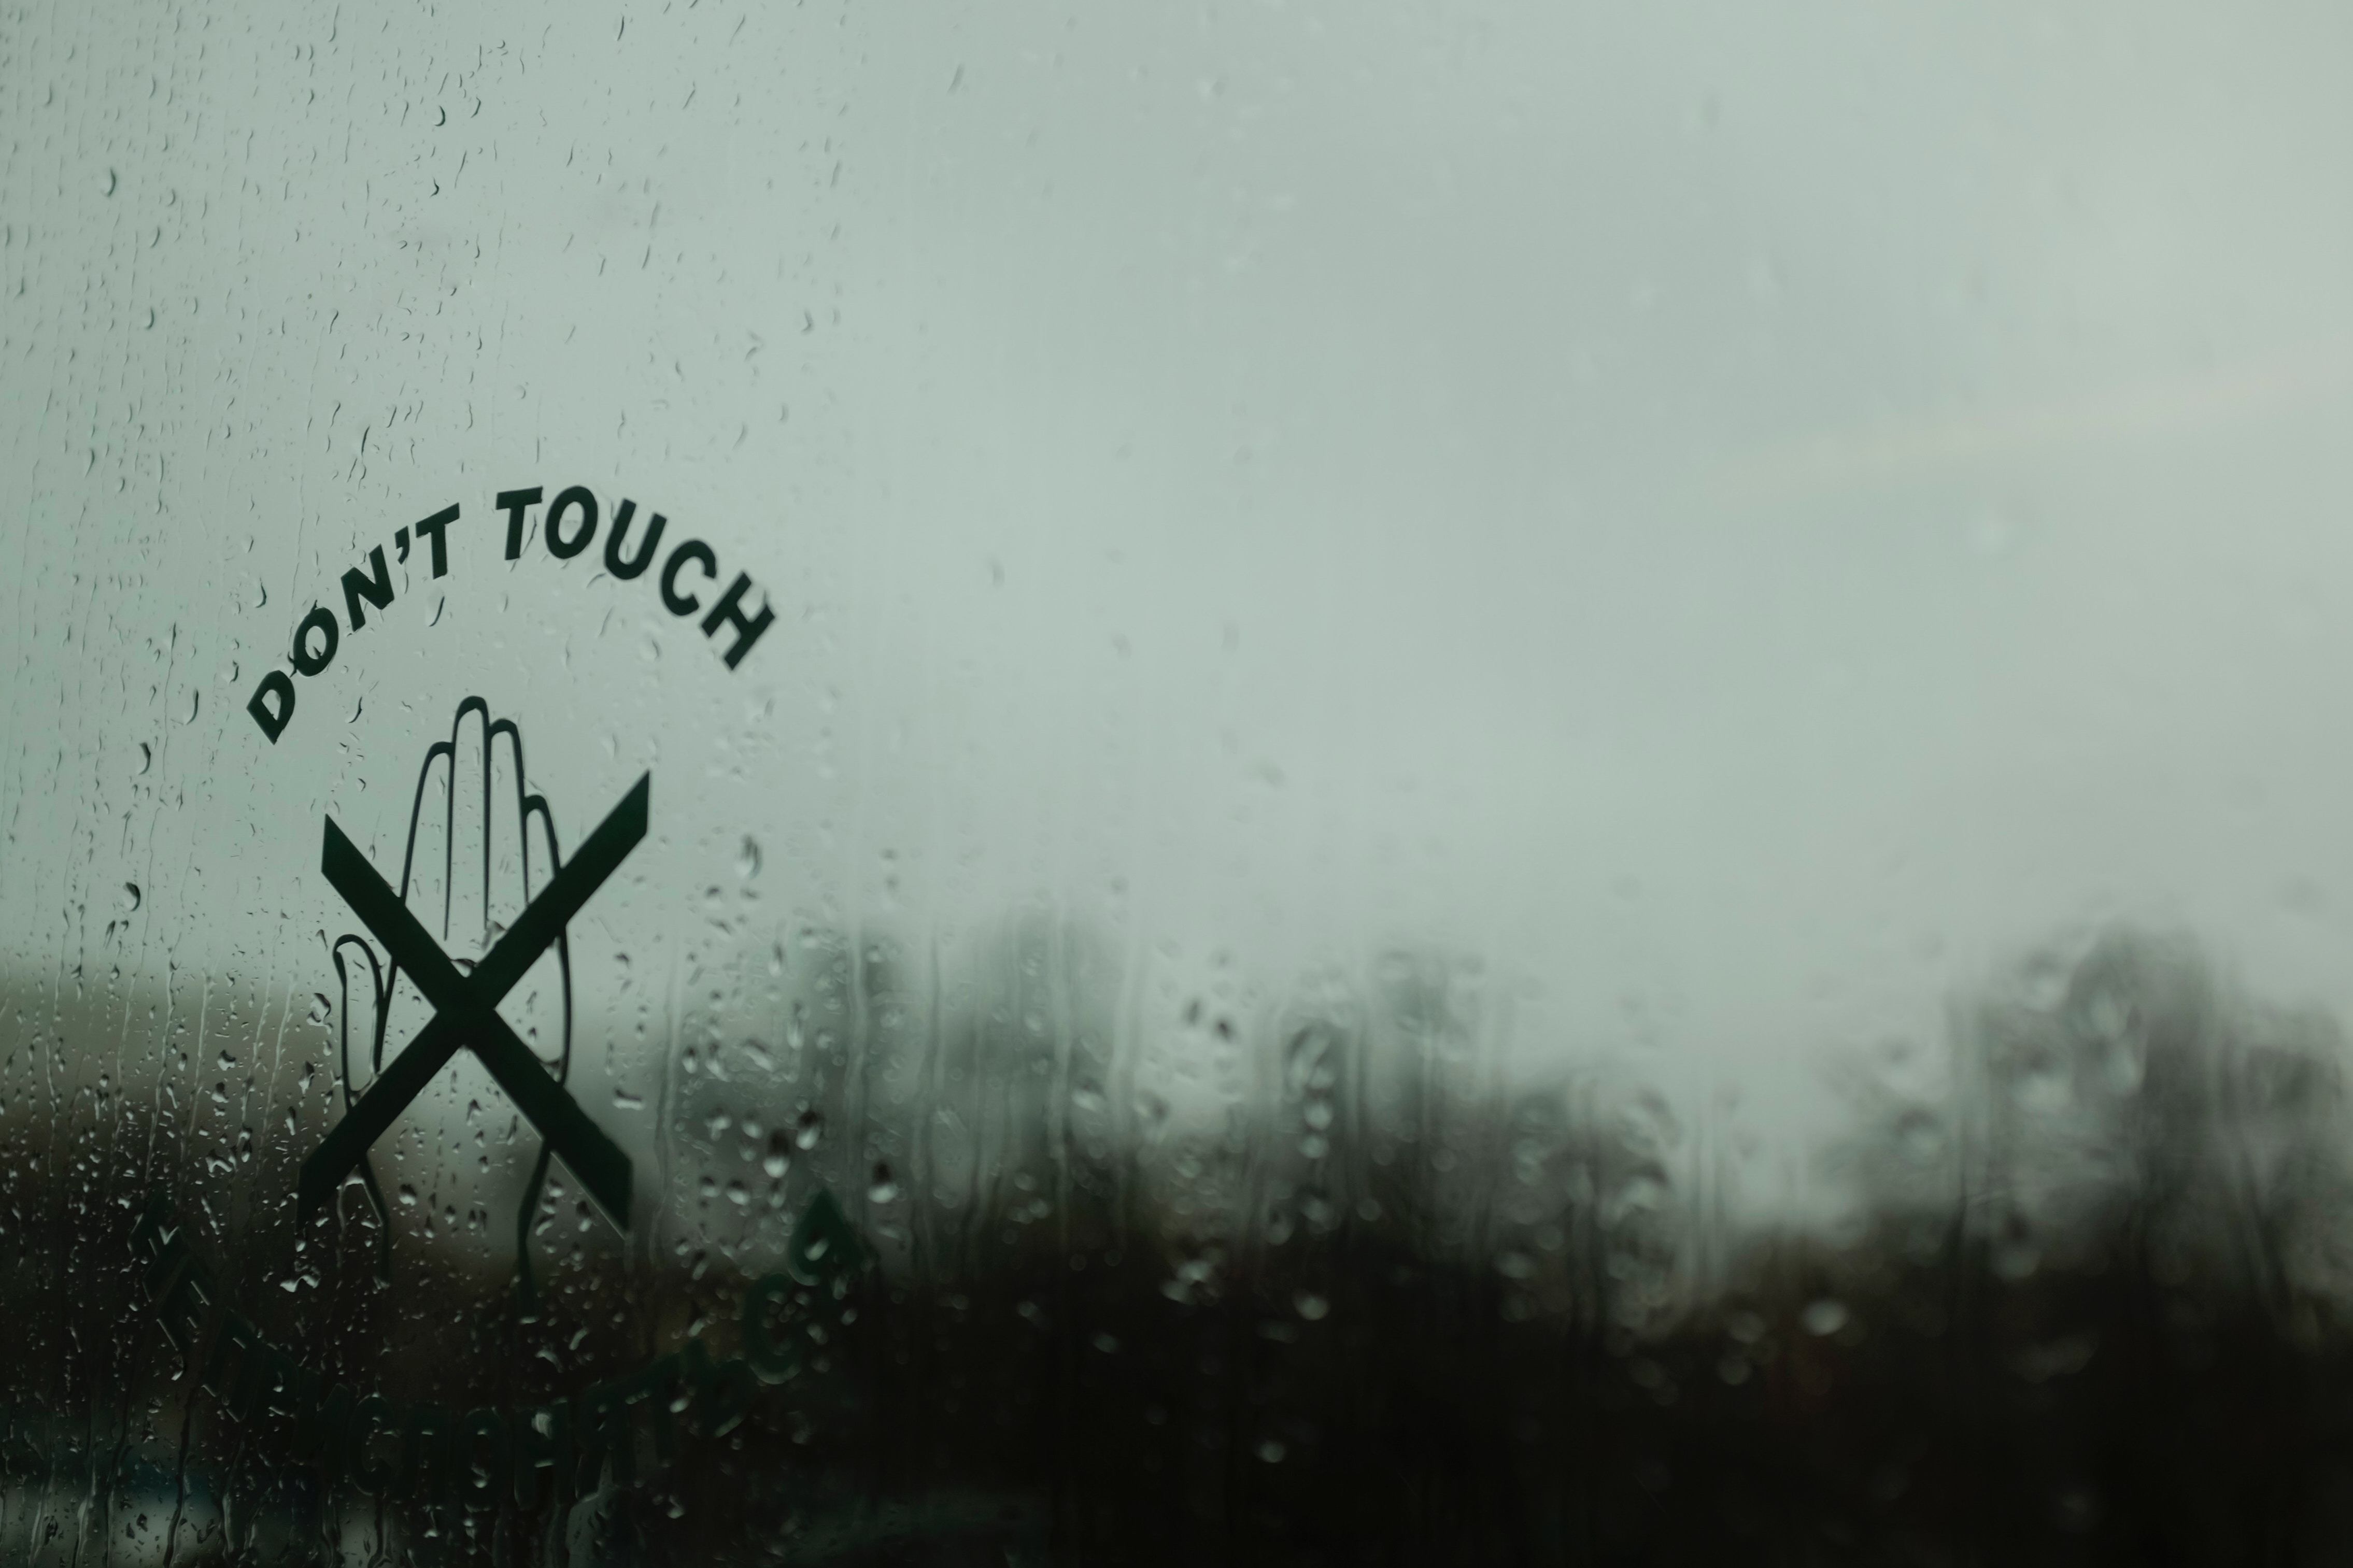 moisture, rain, drops, words, glass, inscription, touching, touch